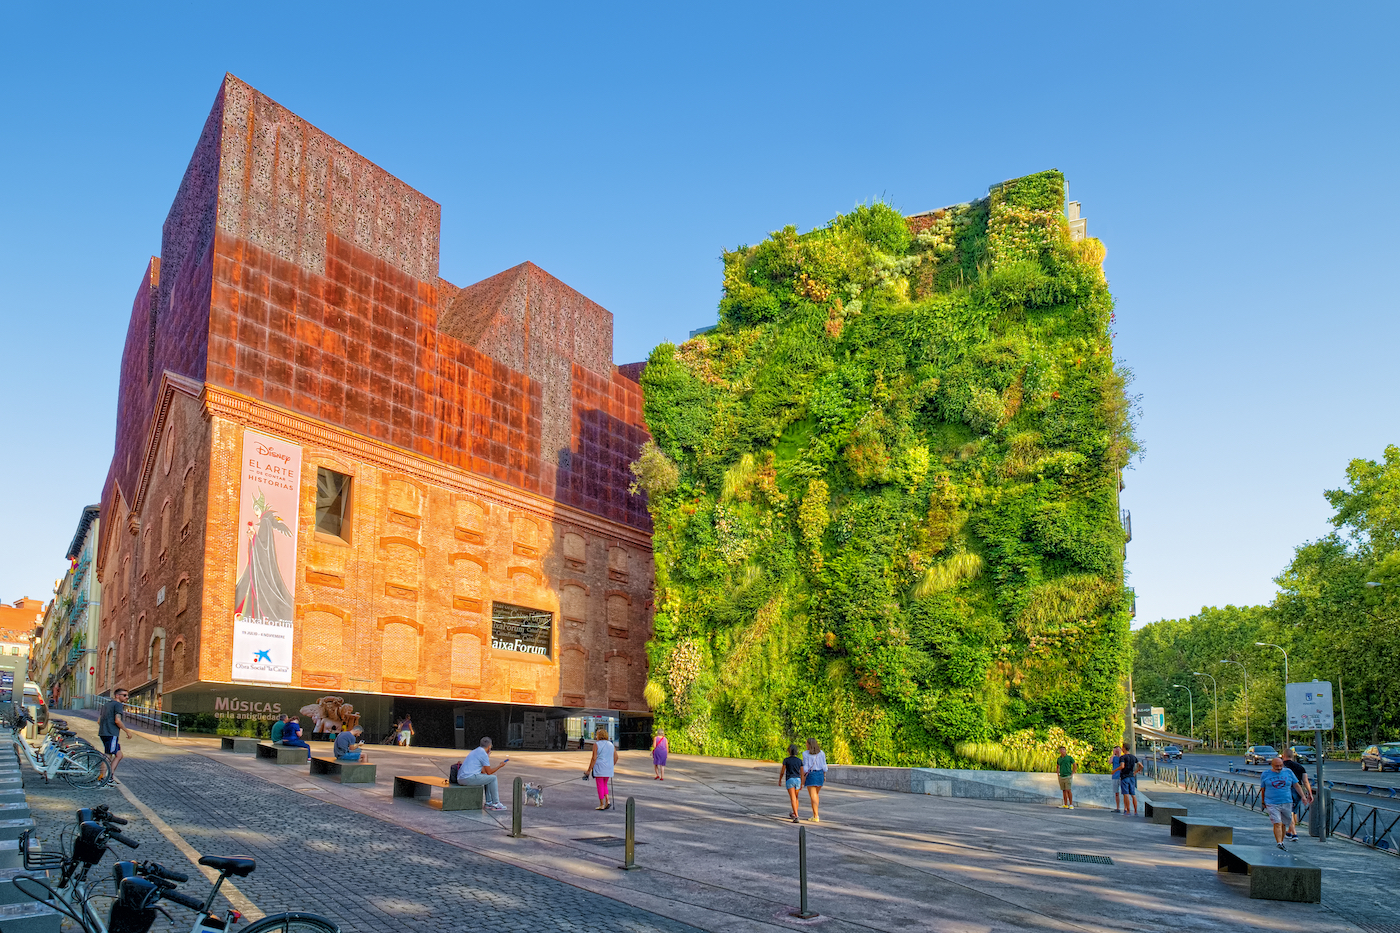 Het CaixaForum kunstmuseum in Madrid, Spanje.